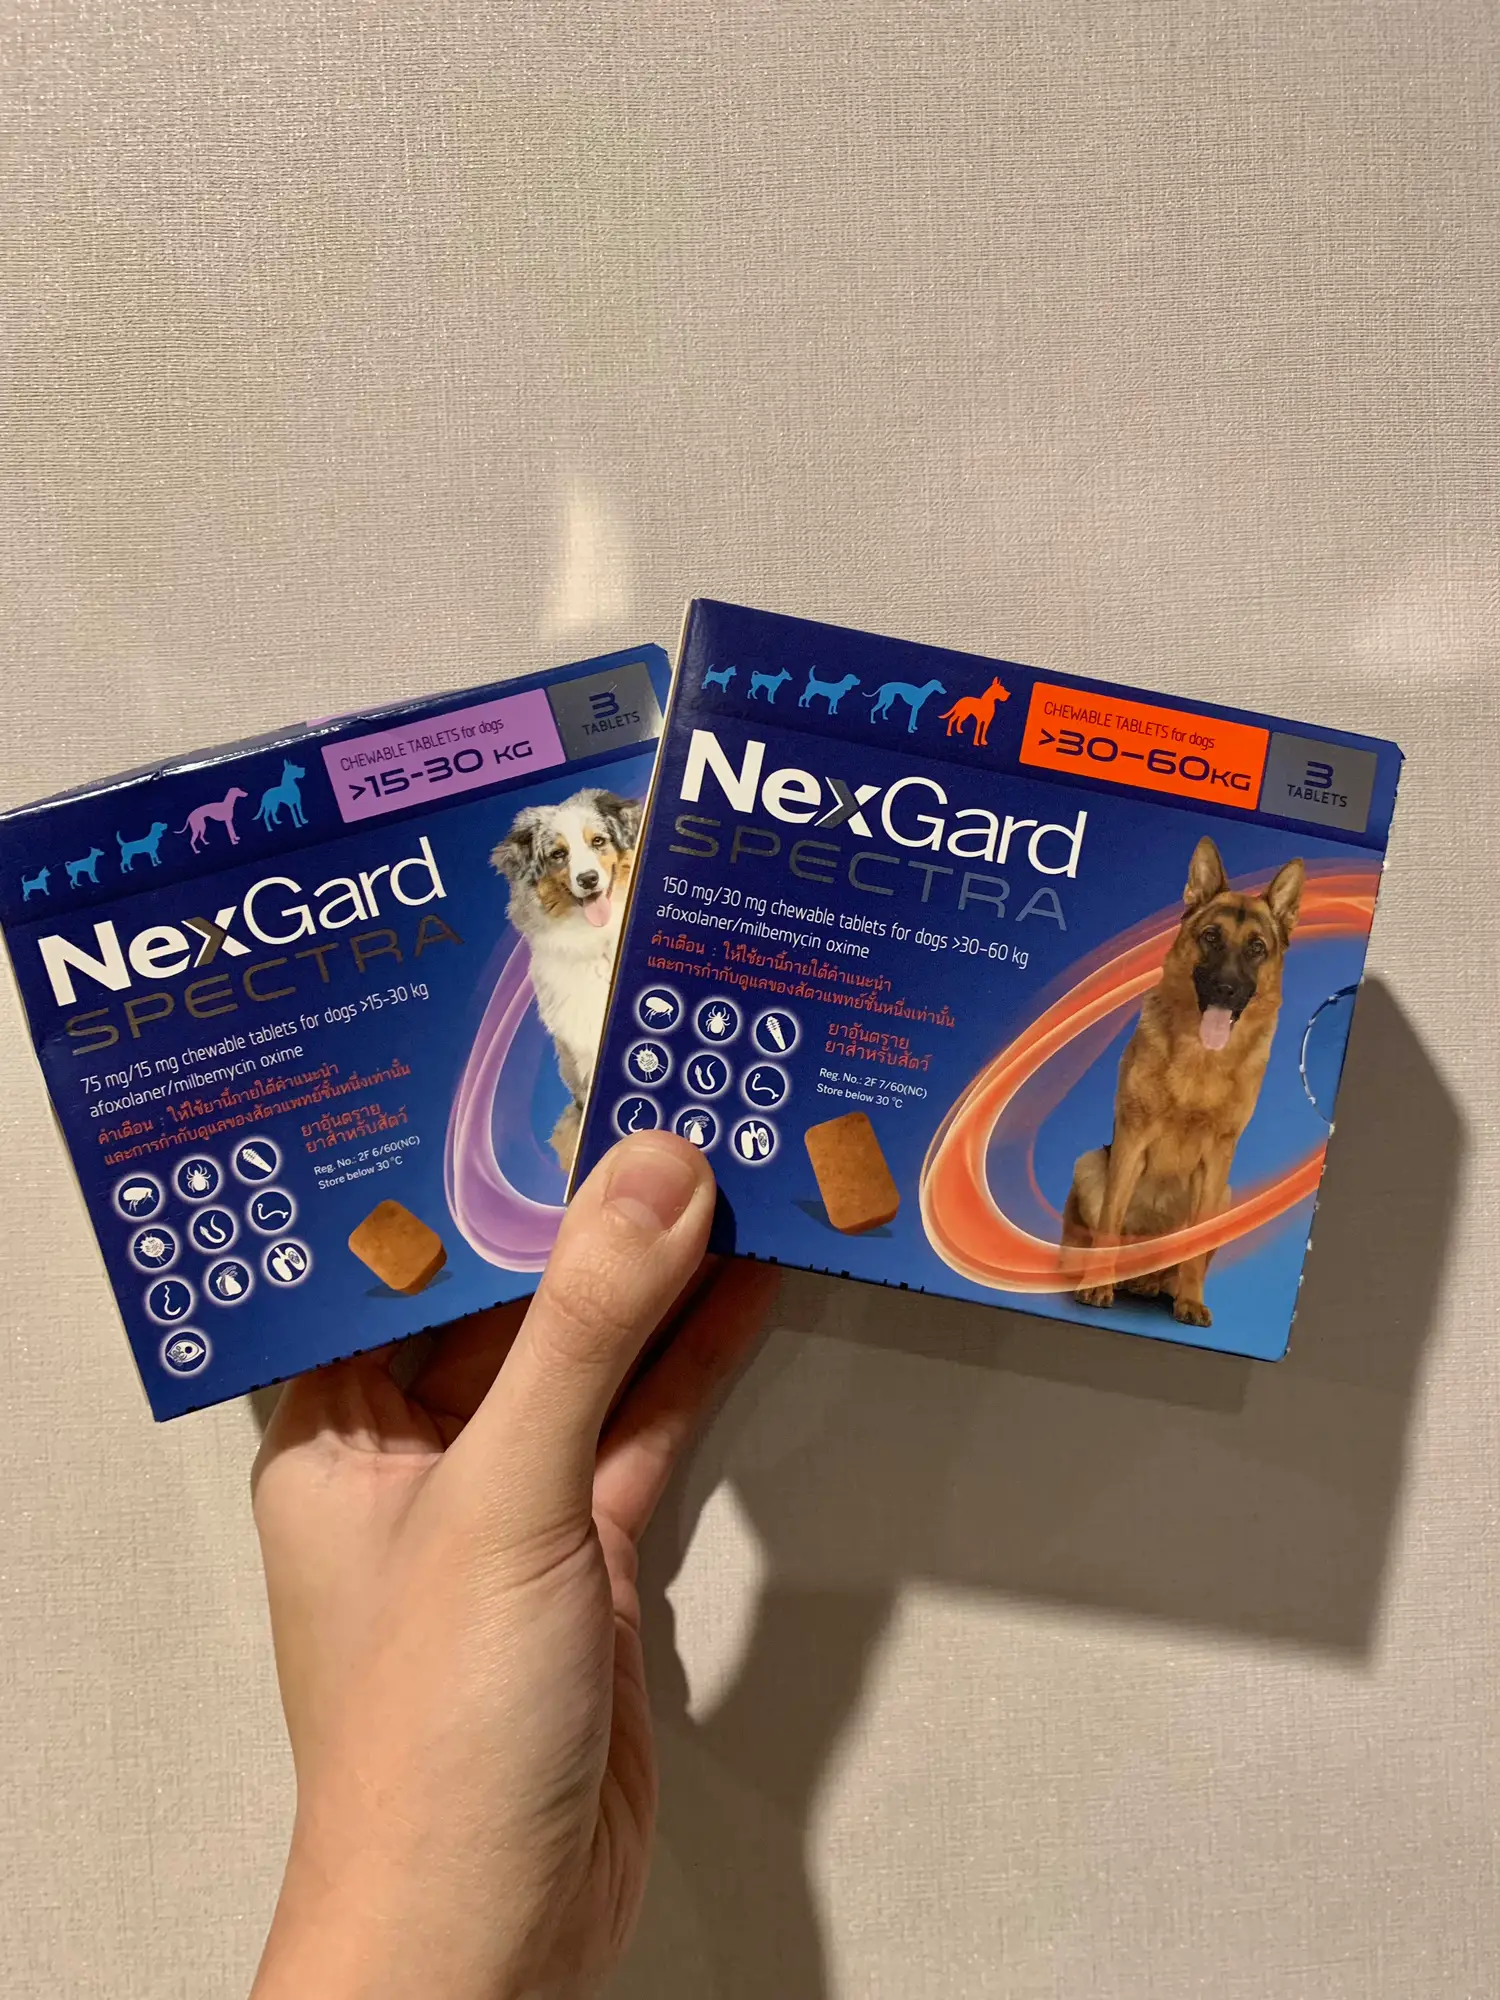 Nexgard spectra for dogs anti-tick medicine dog chewing type